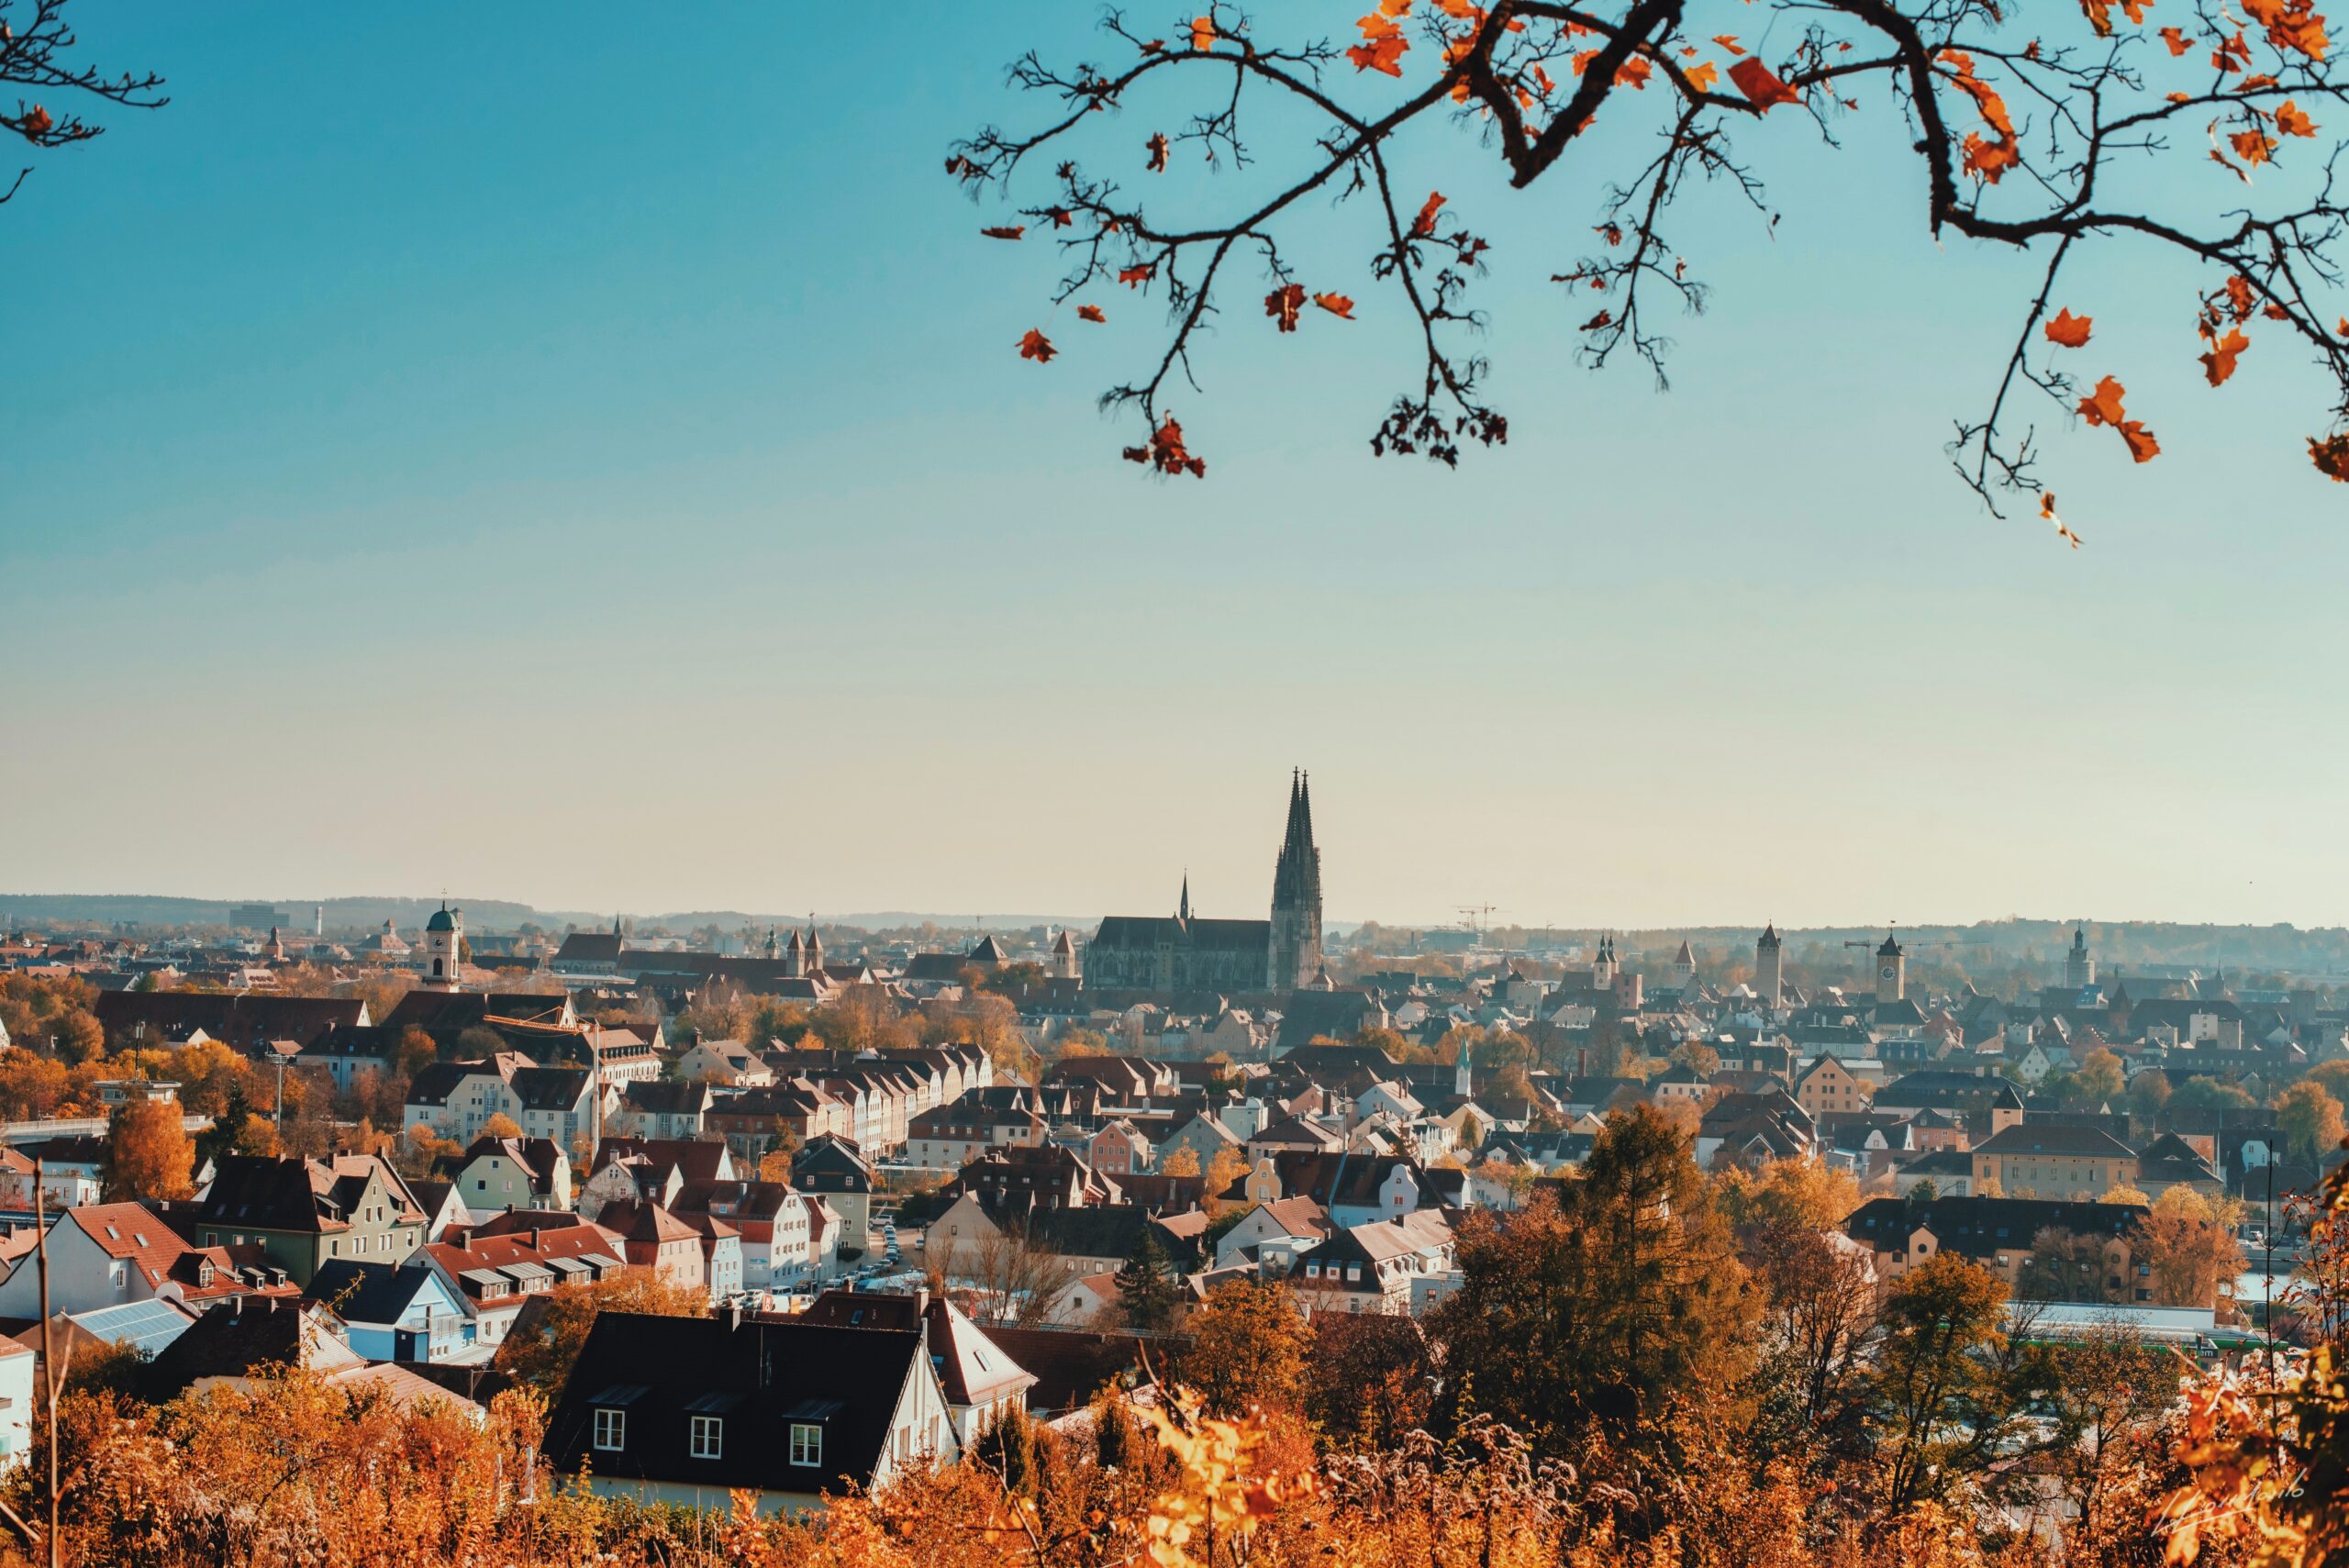 Regensburg scaled